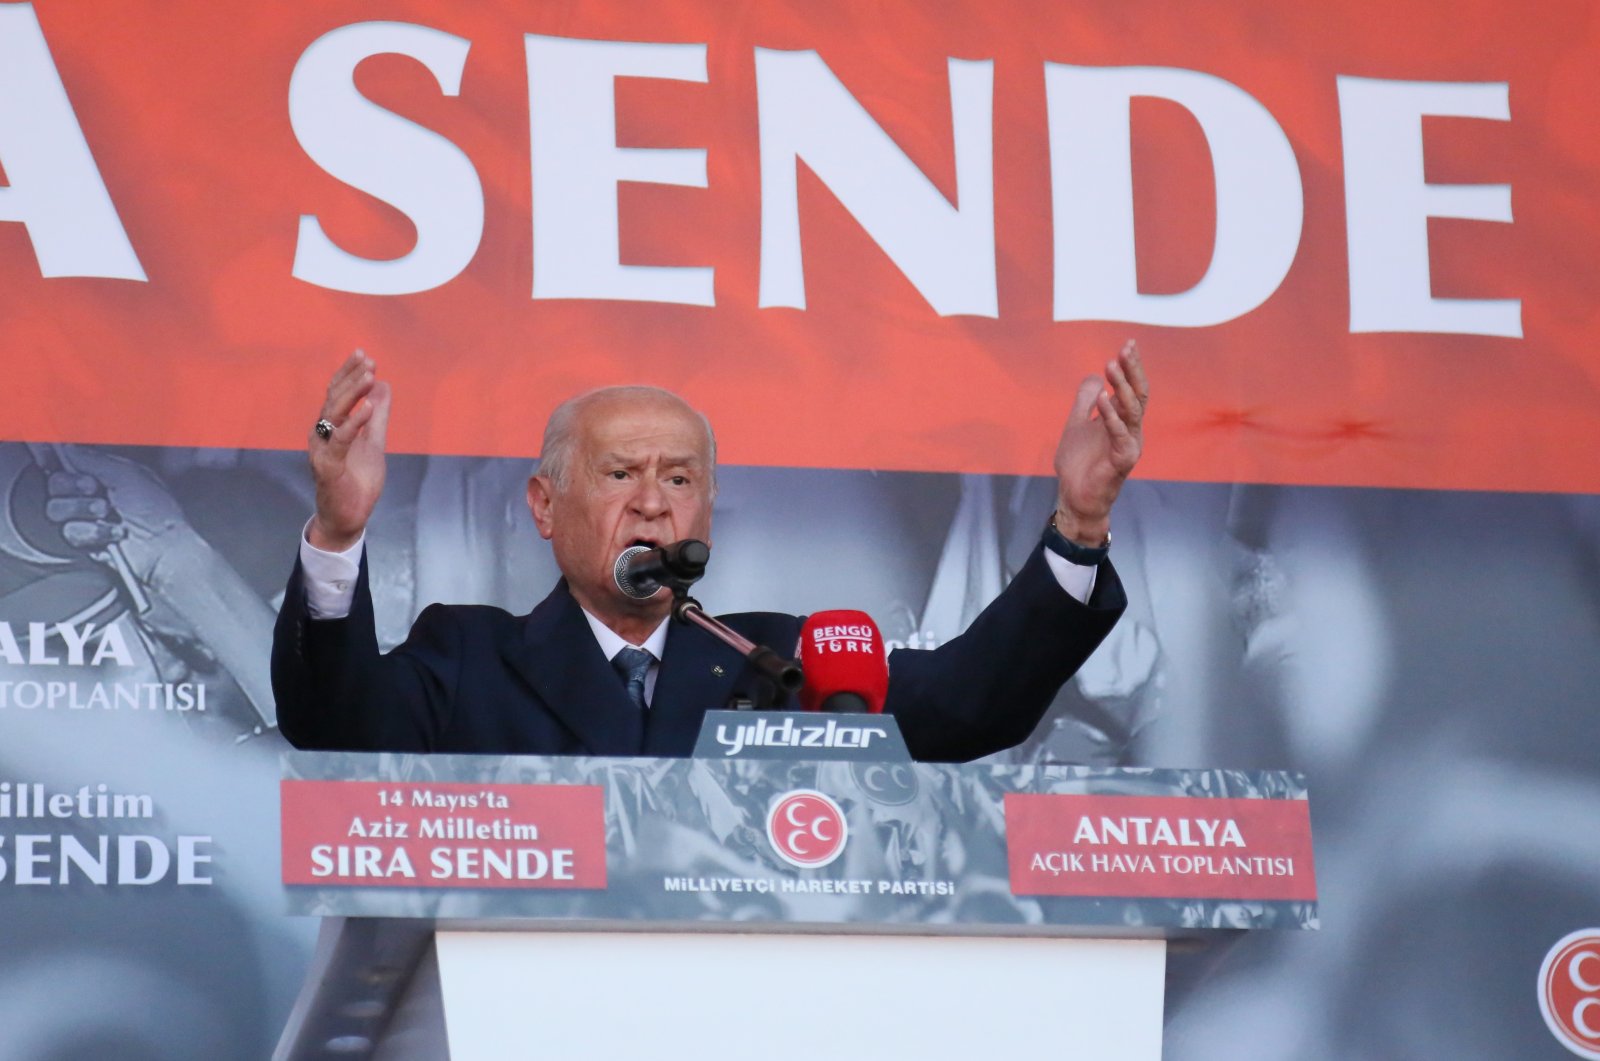 MHP Chairman Devlet Bahçeli addresses supporters in Antalya, Türkiye, May 13, 2023. (DHA Photo)